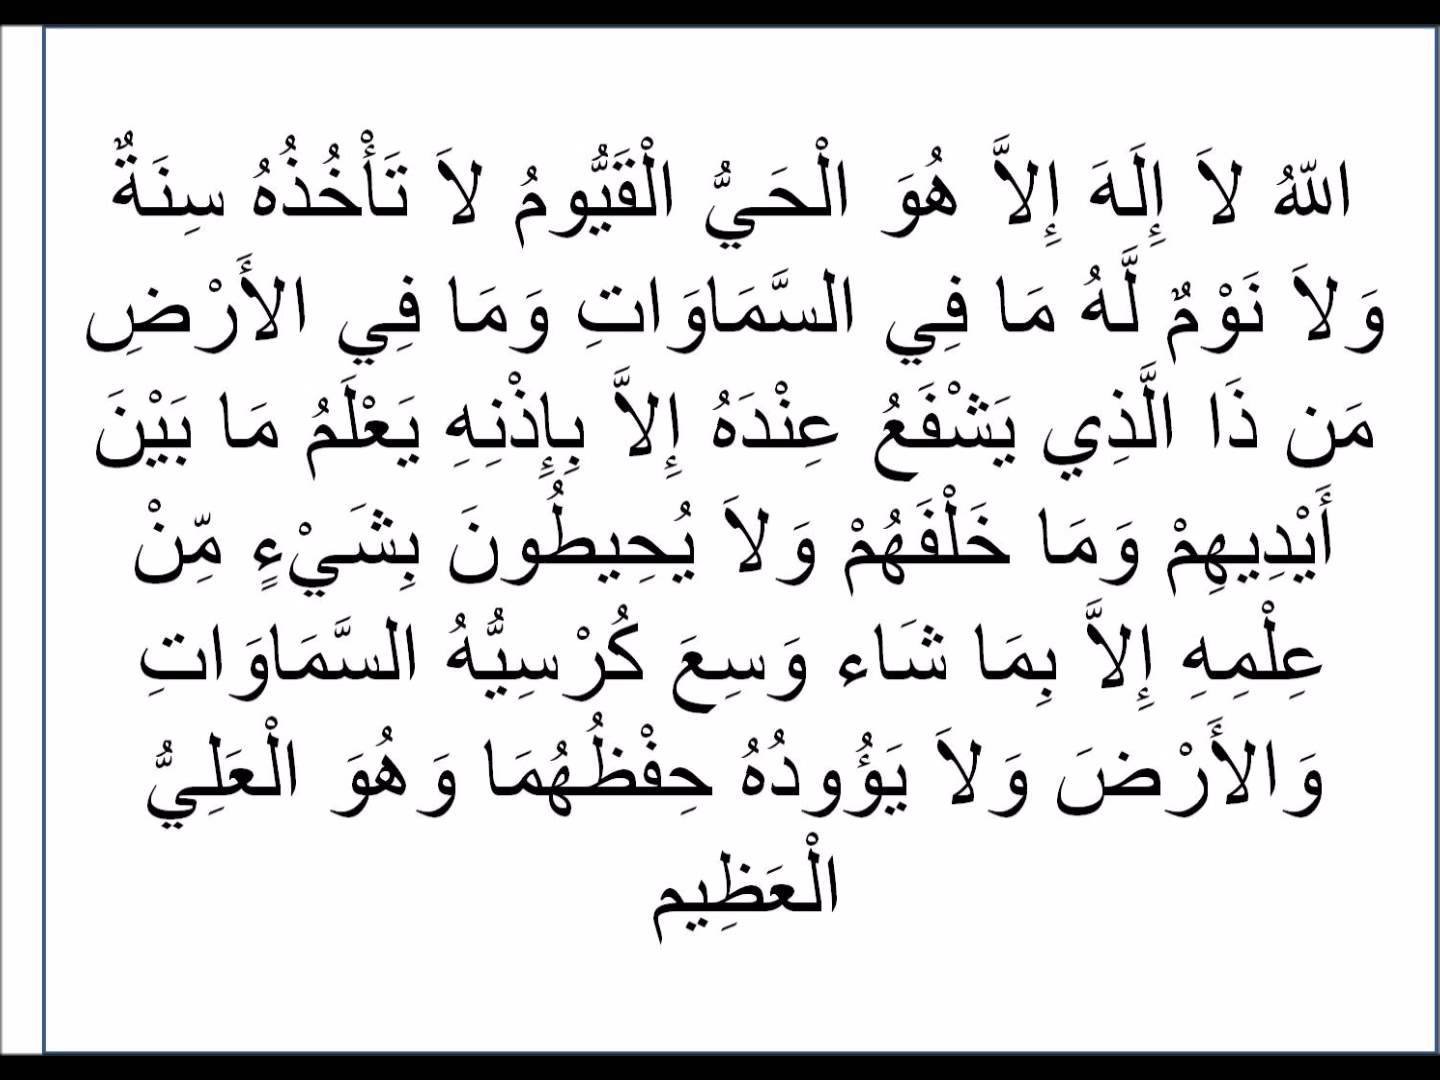 scaffold meaning in arabic